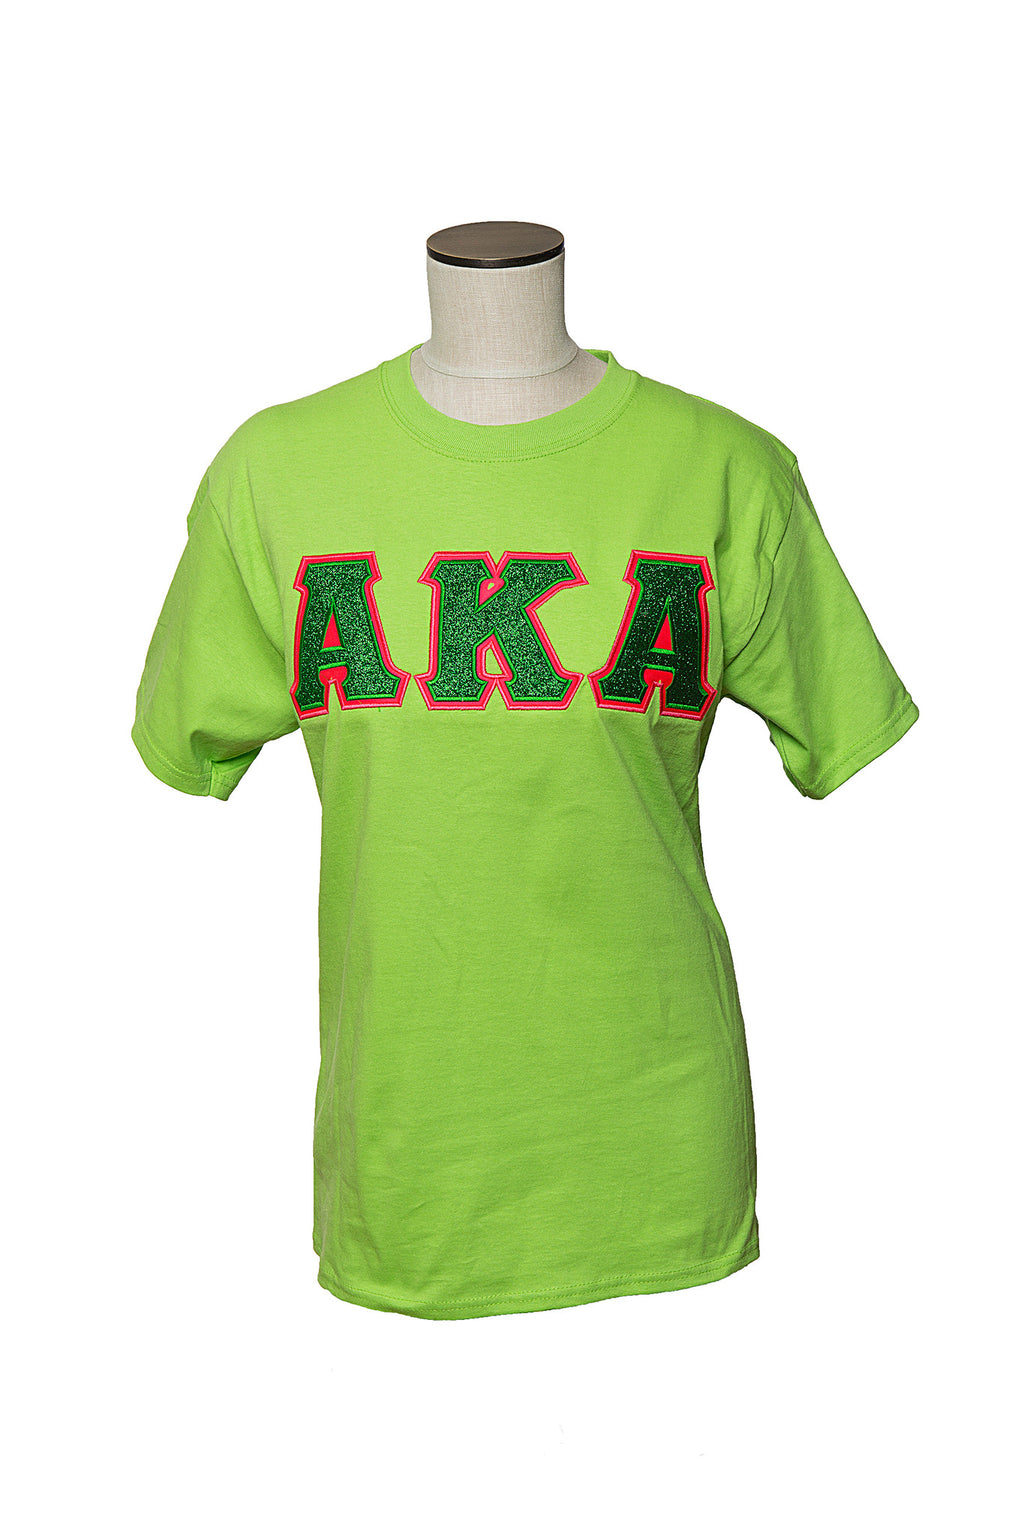 AKA Green Glitter flake Applique shirt